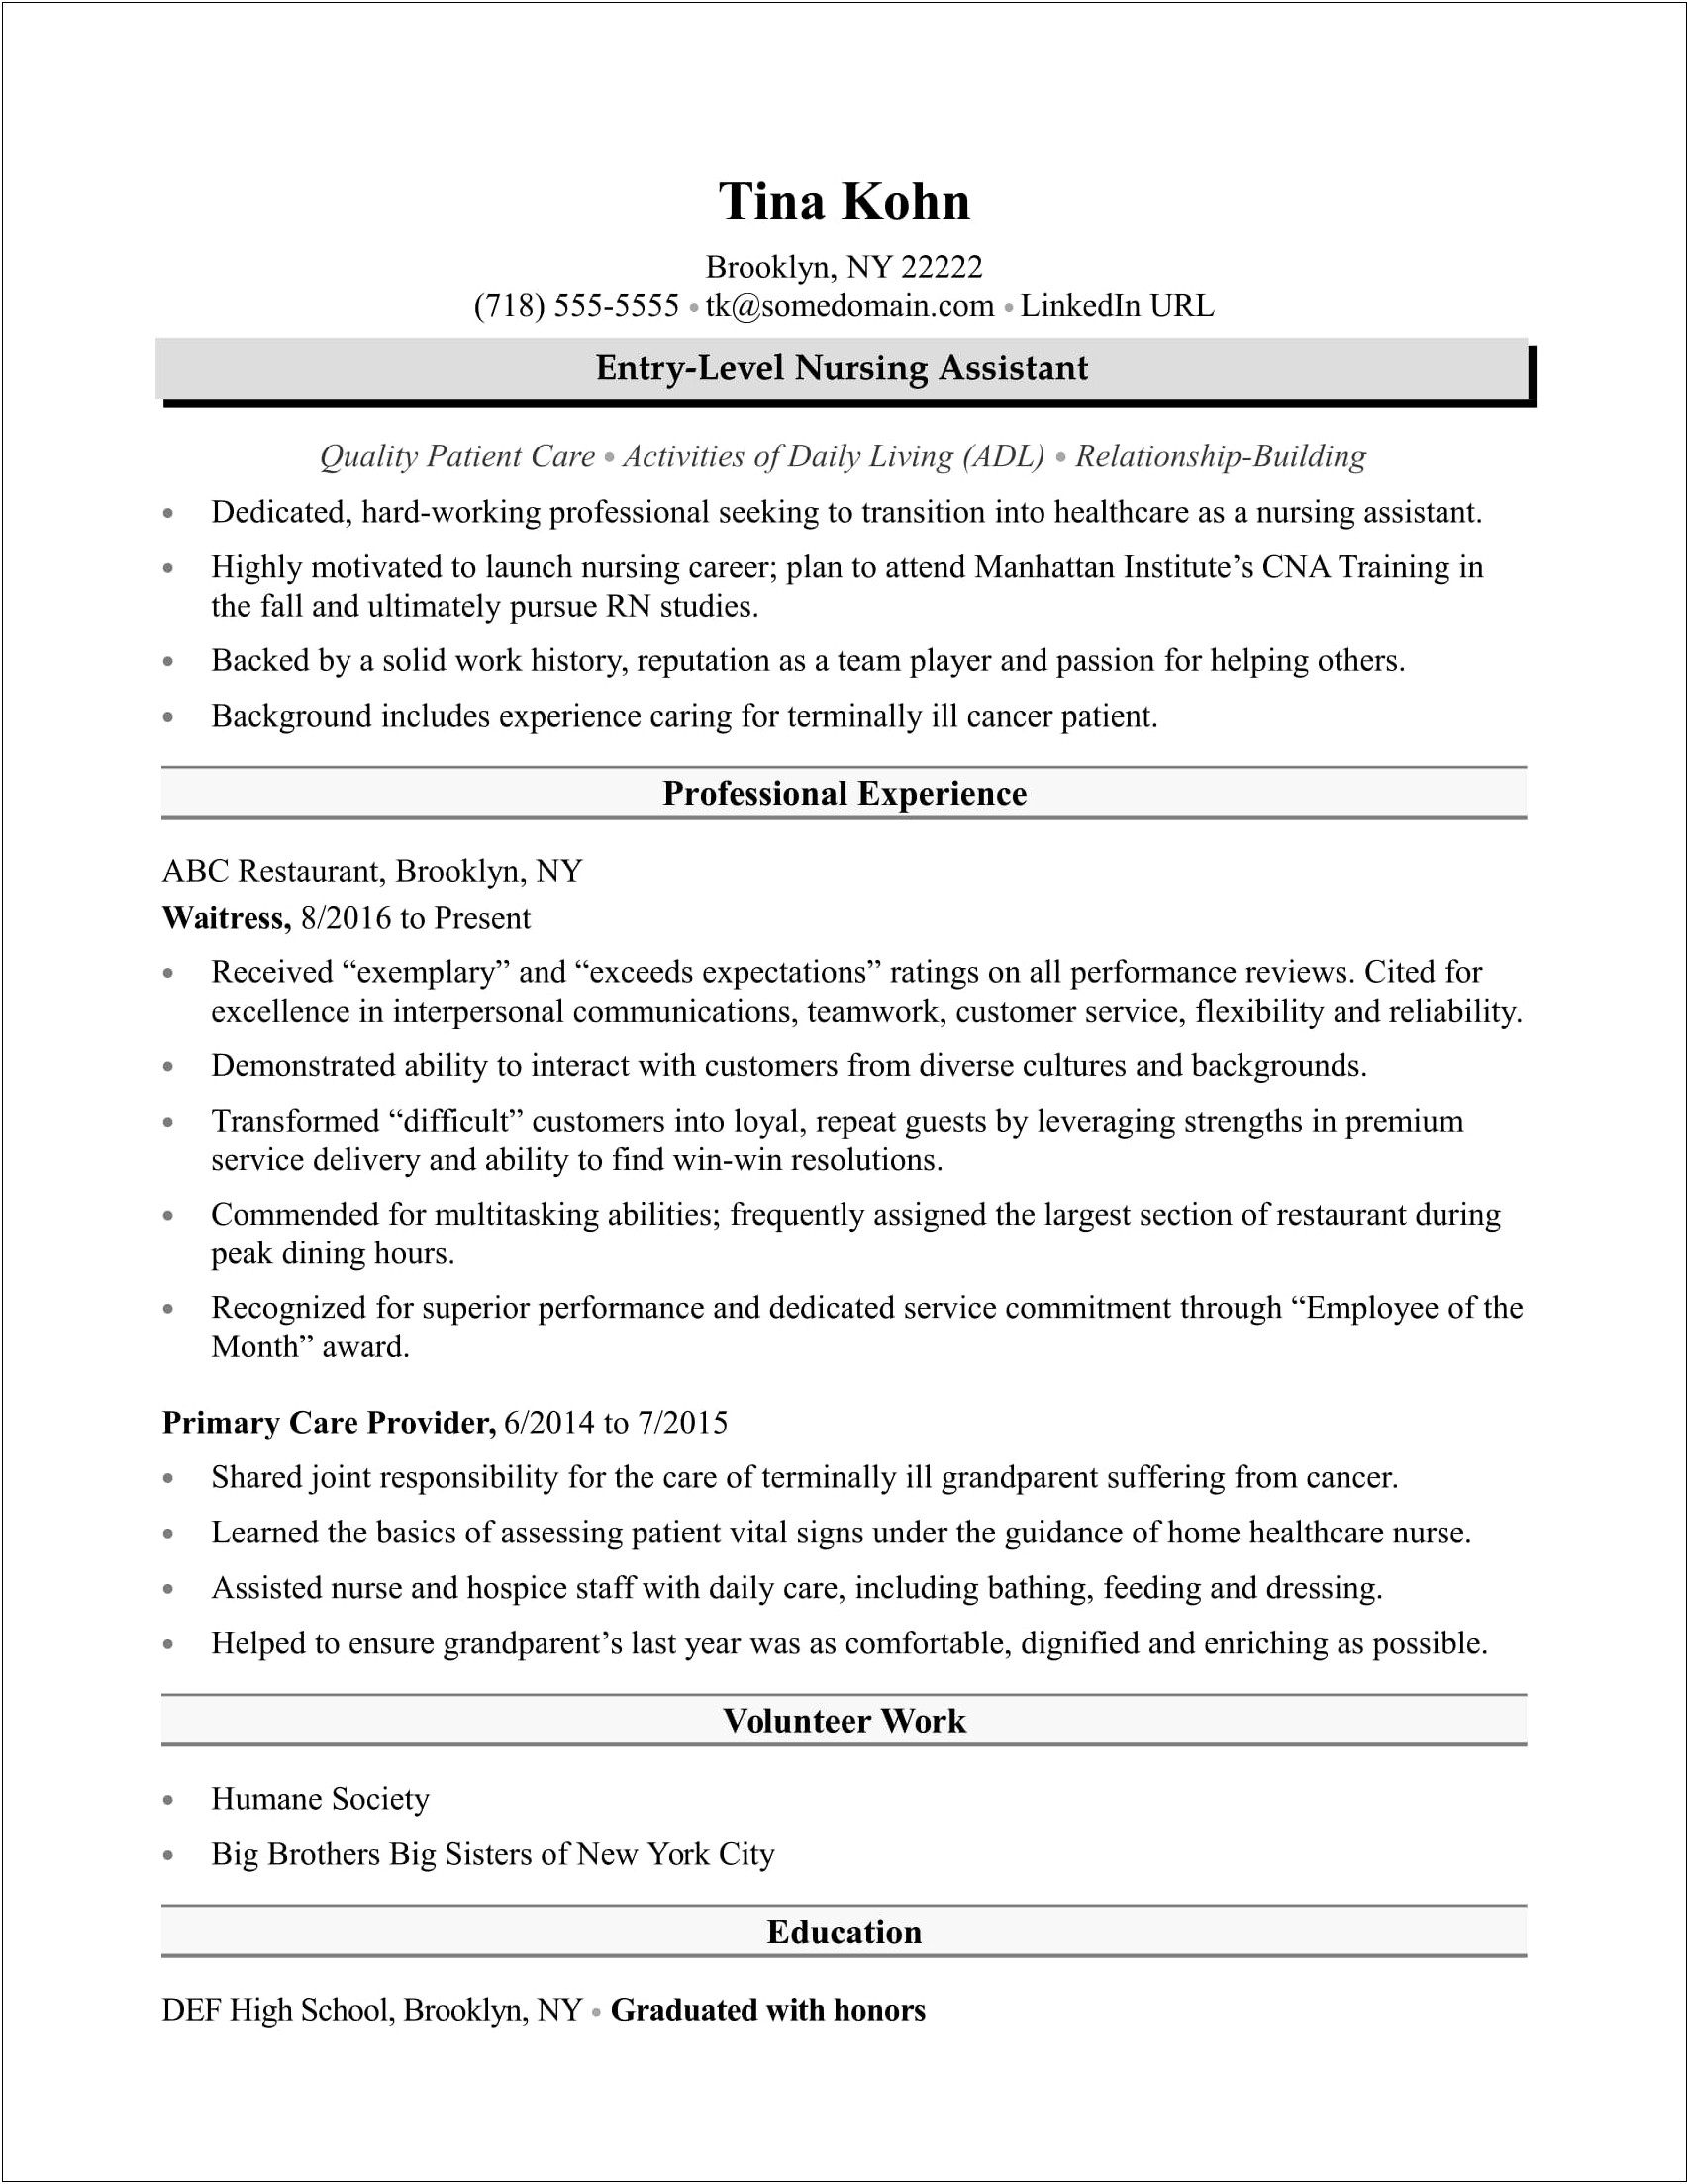 Resume Examples For Hospital Volunteer